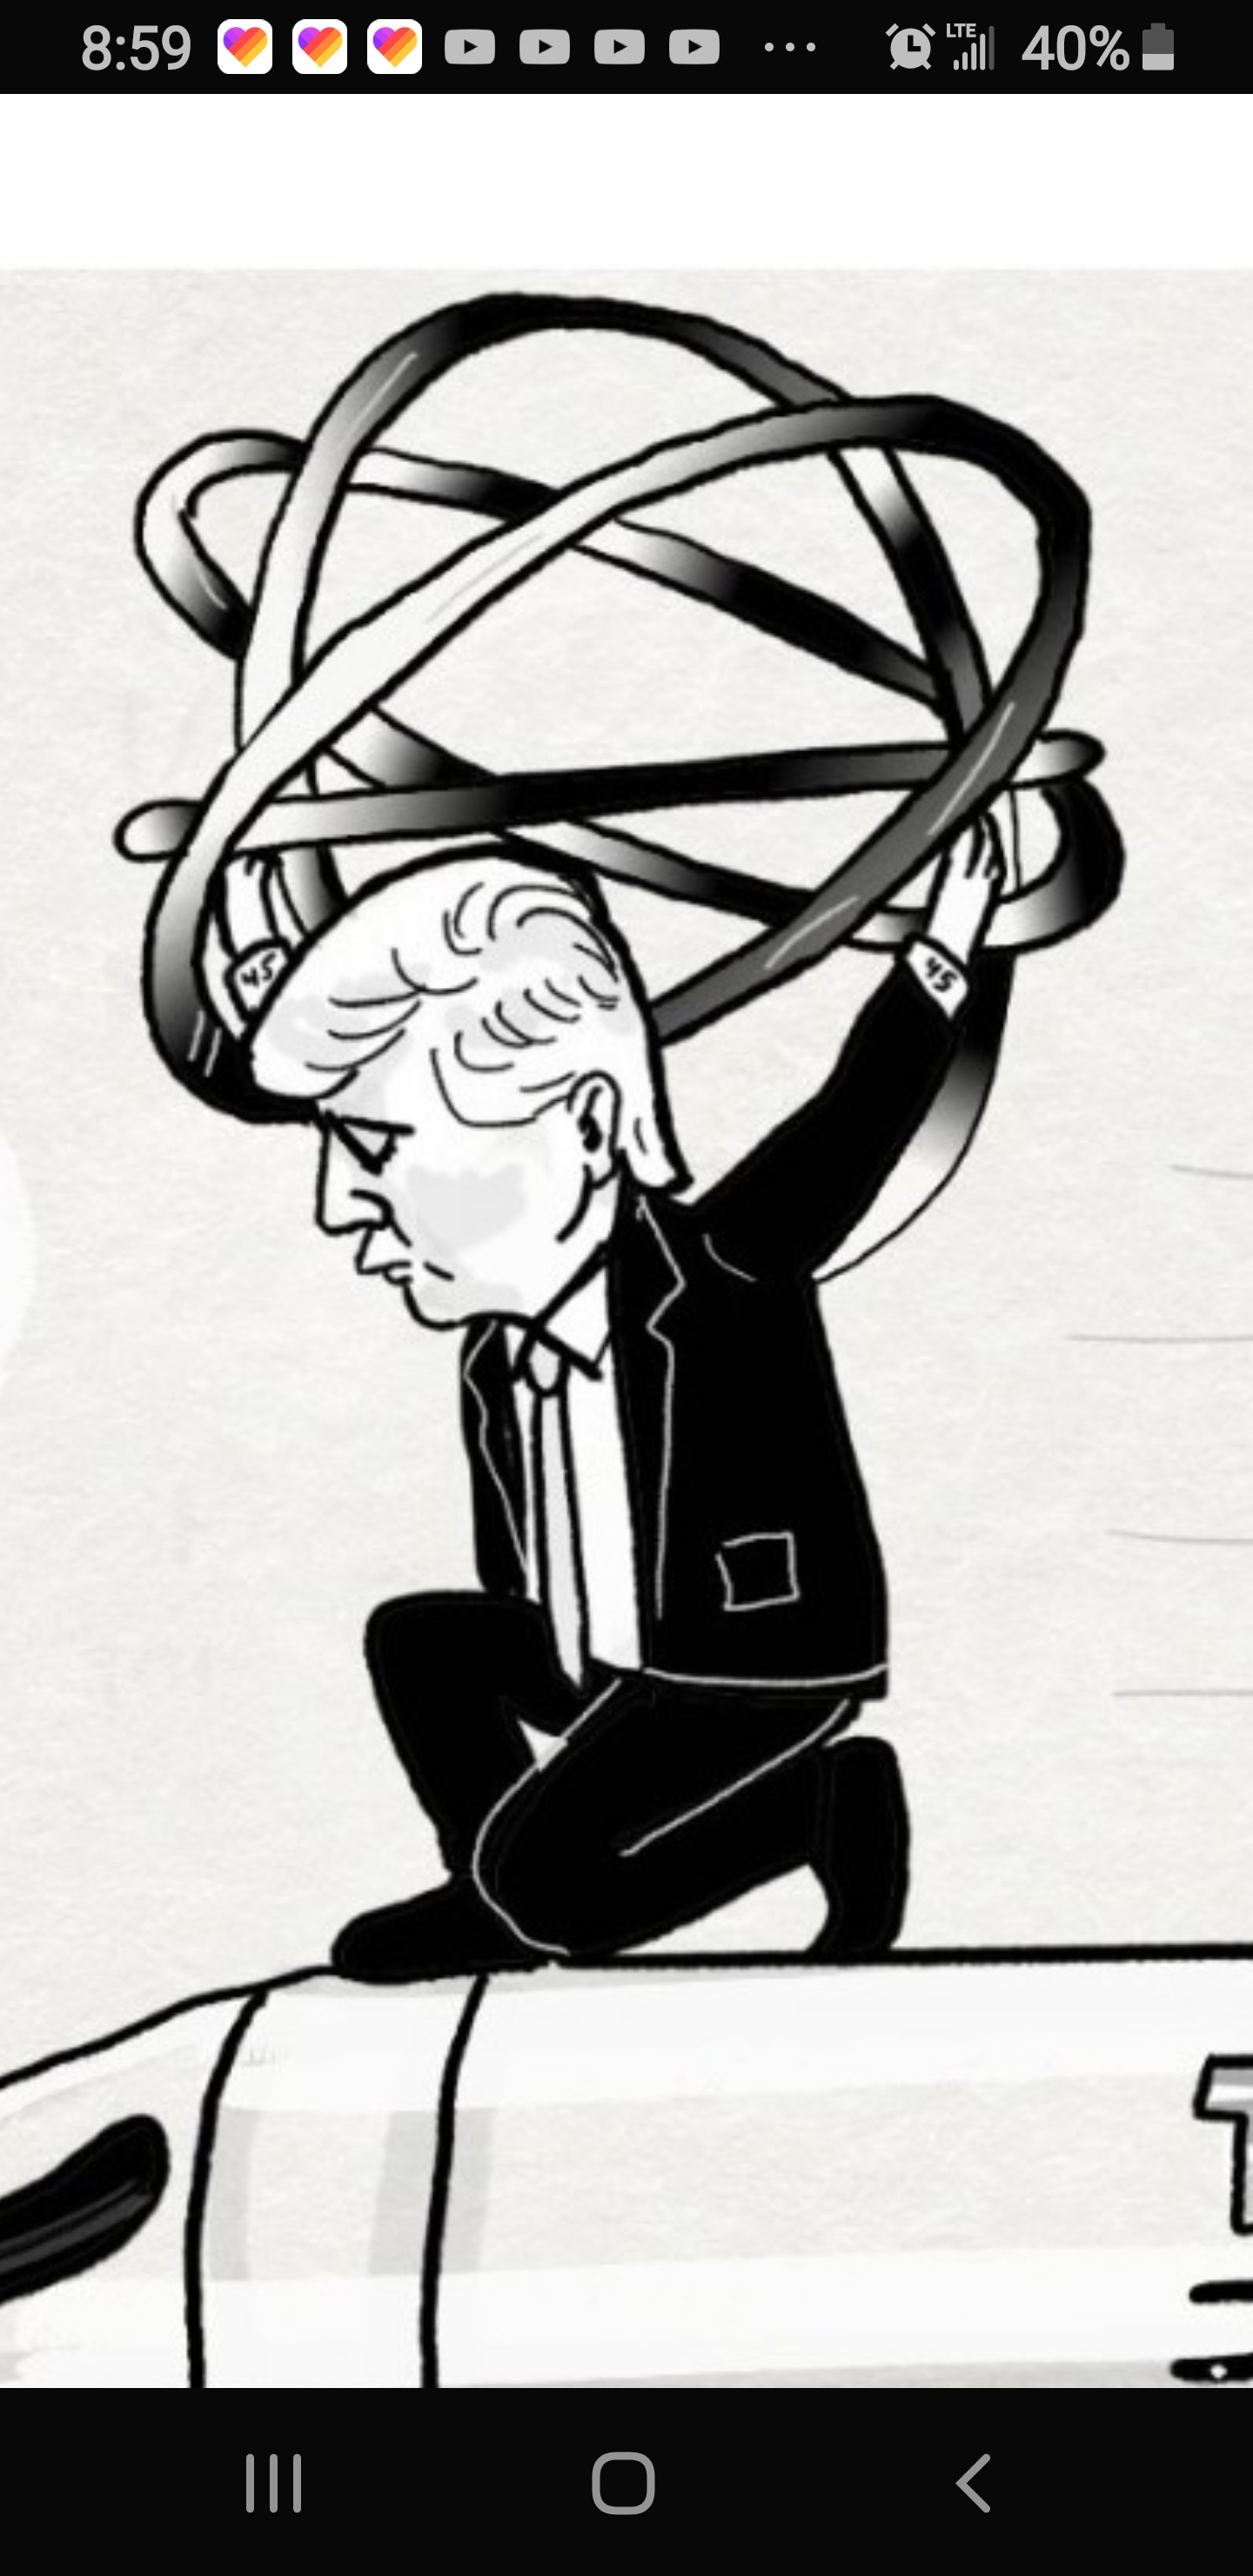 President Donald Trump train Atlas shrugged political cartoon inktober ride 2019 post thumbnail image